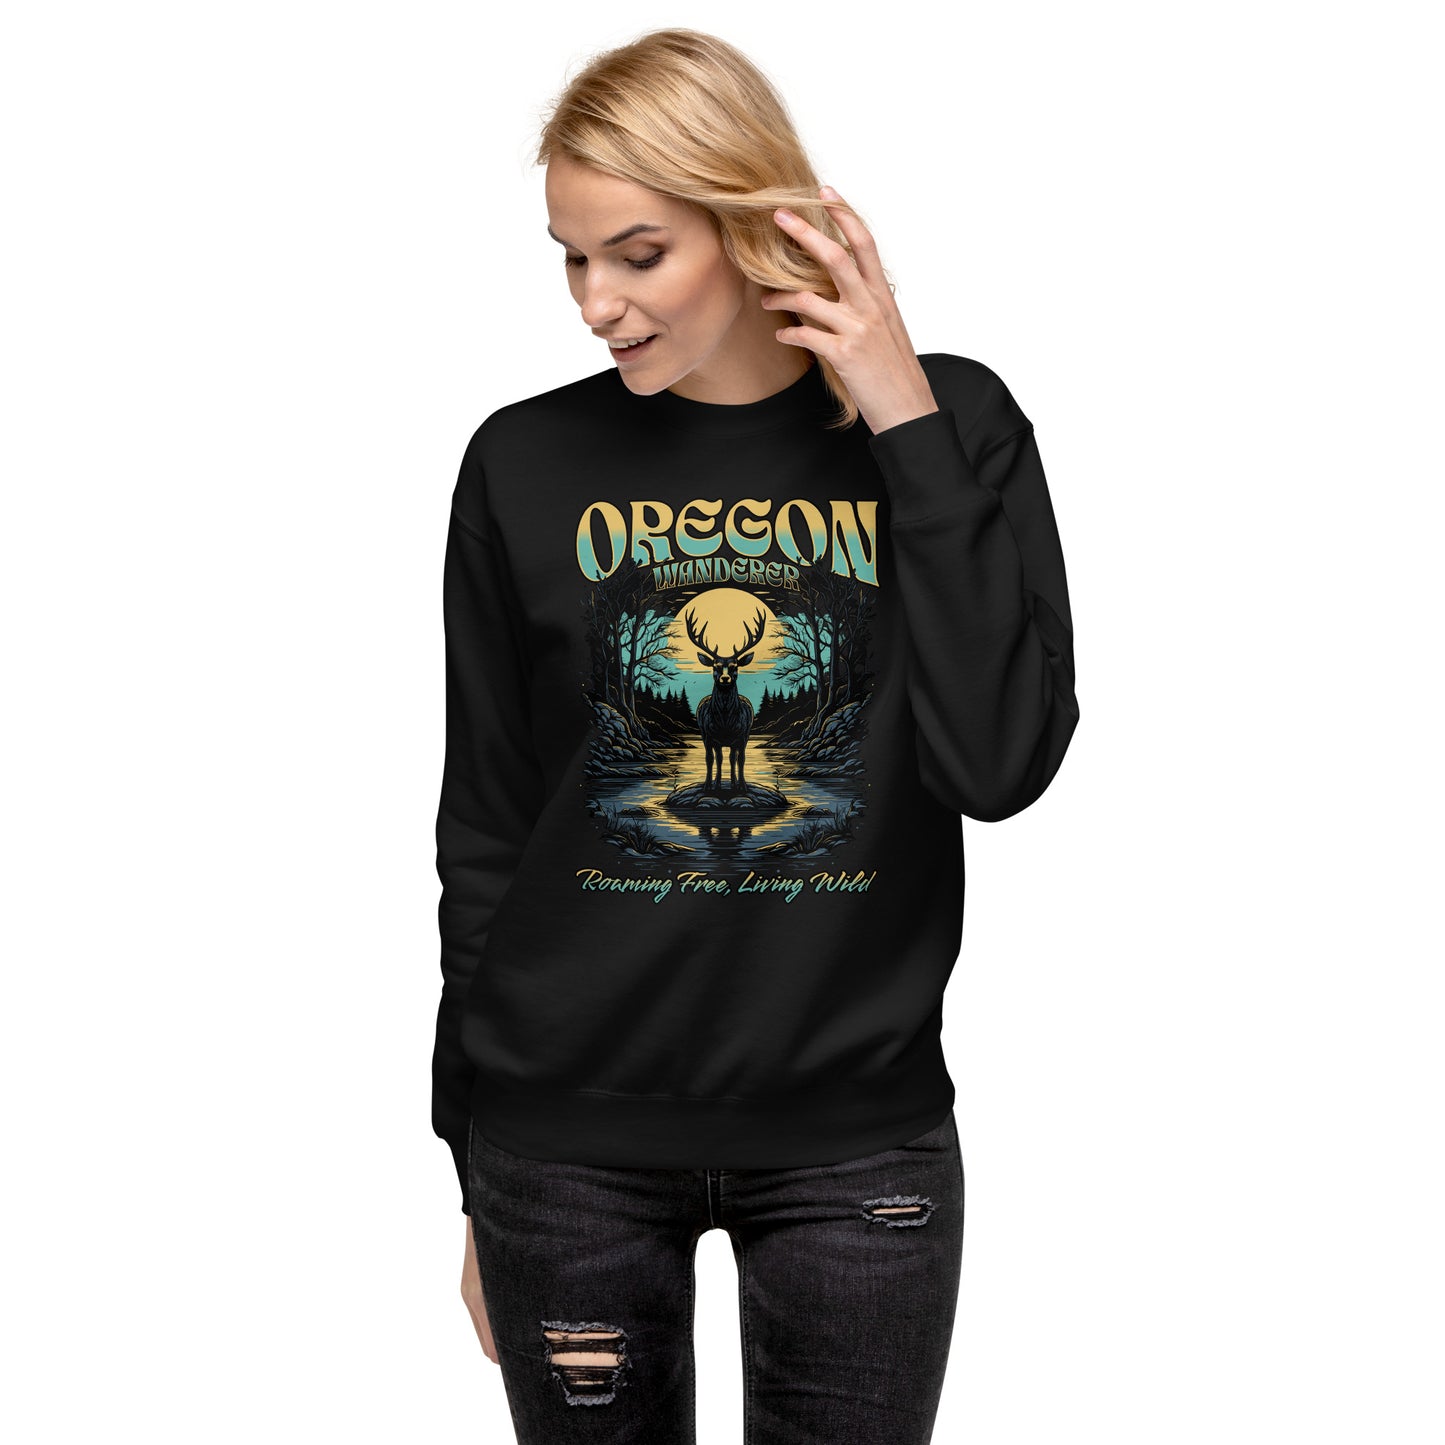 Oregon Wanderer - Unisex Premium Sweatshirt